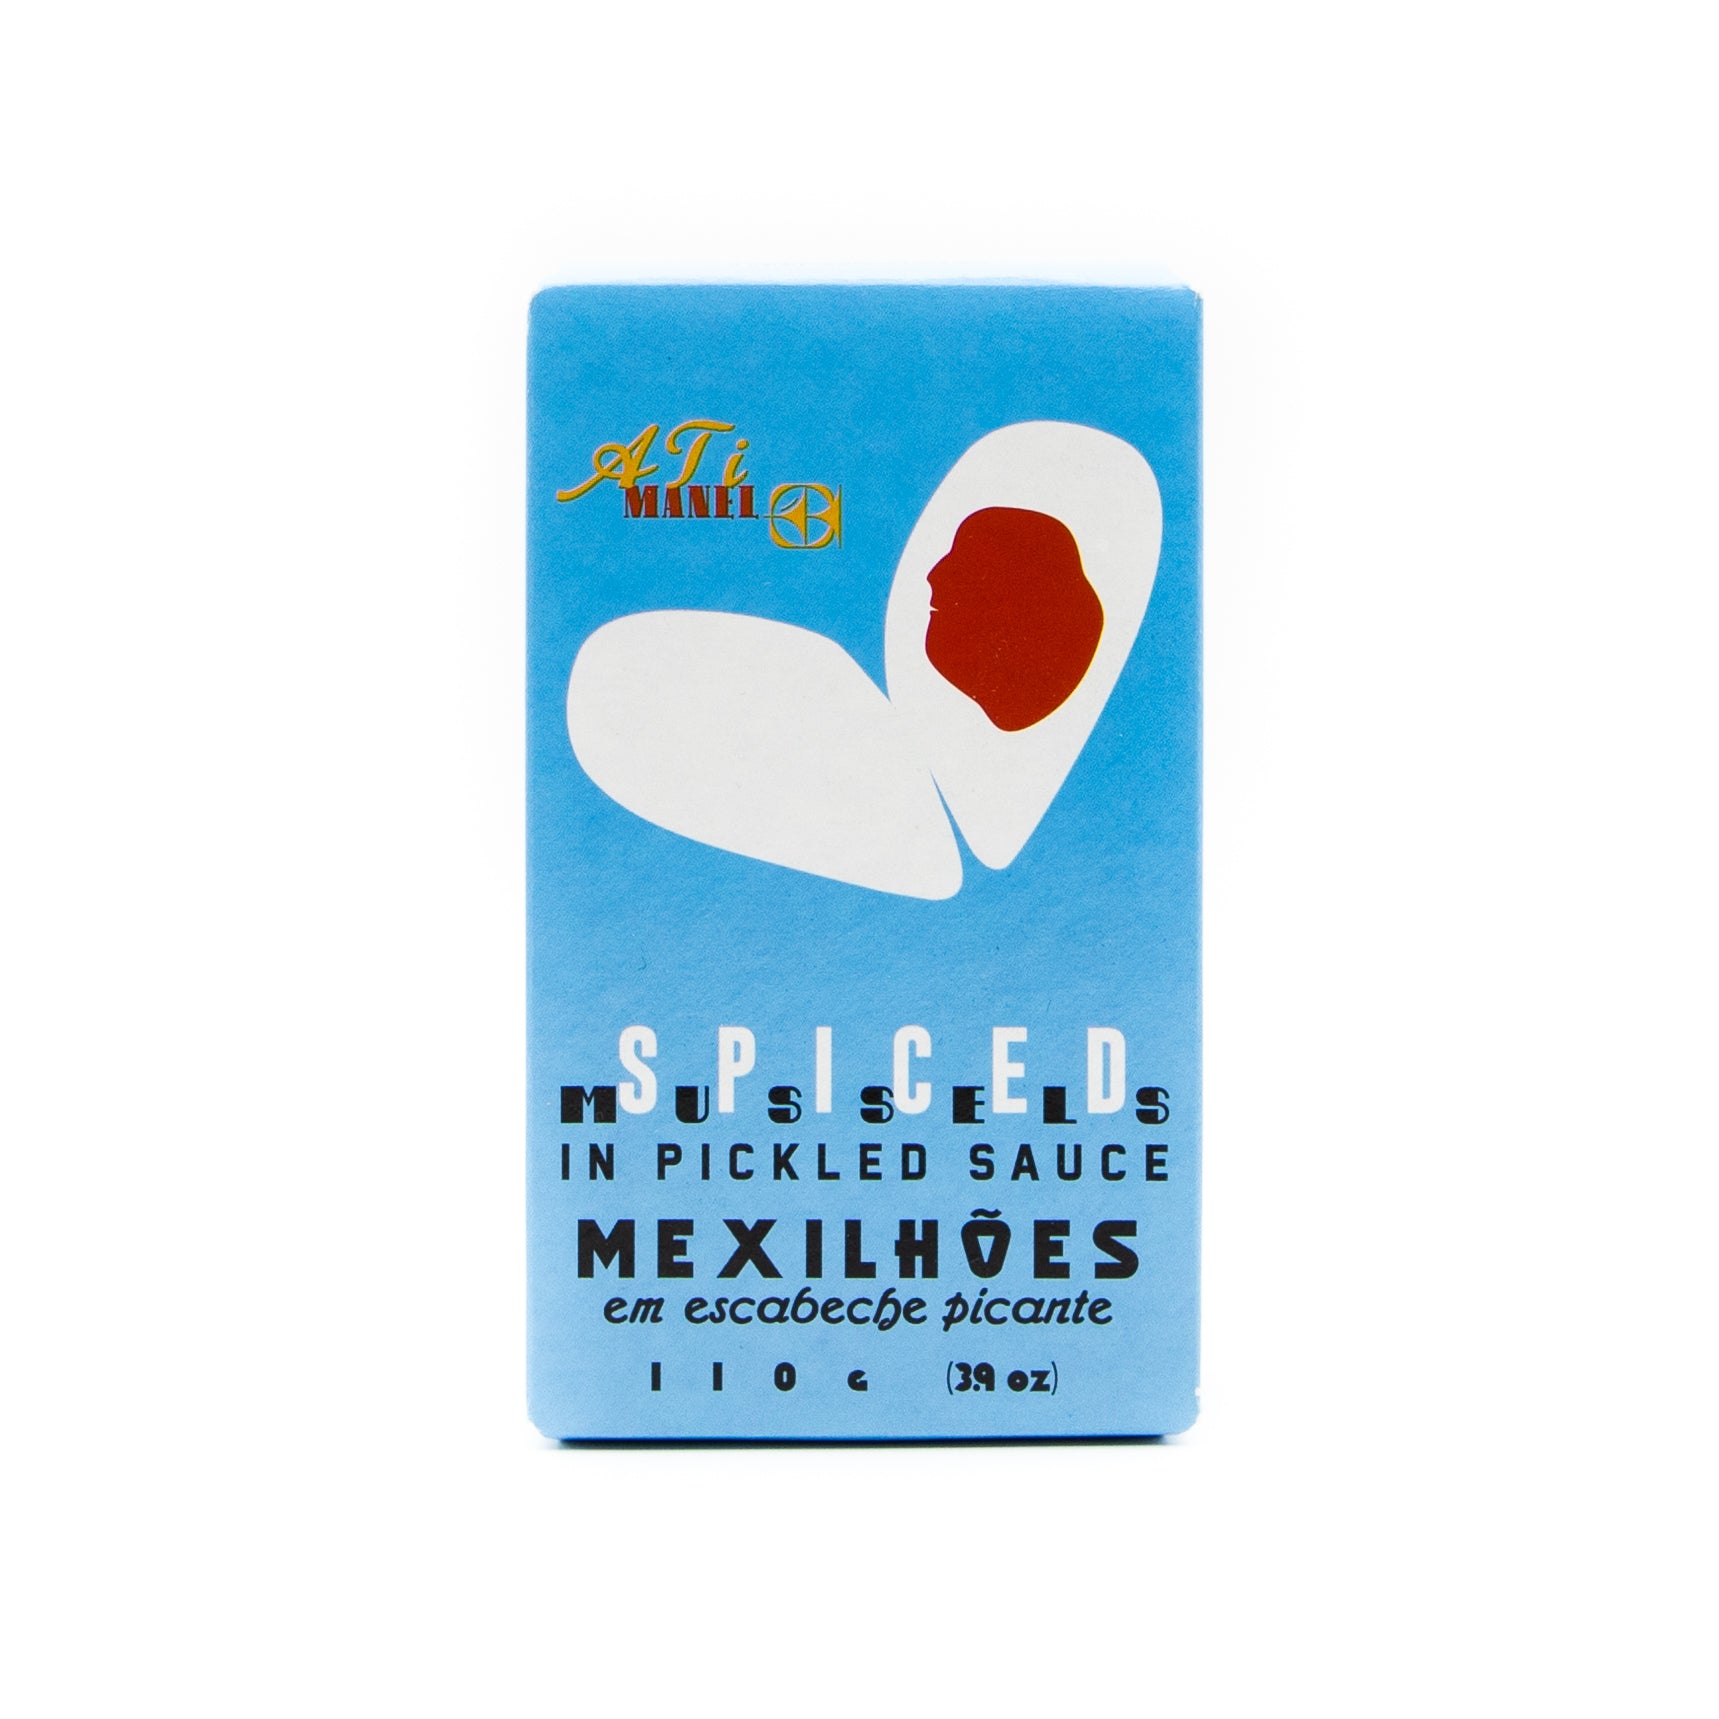 Ati Manel - Spiced Mussels in Escabeche Sauce